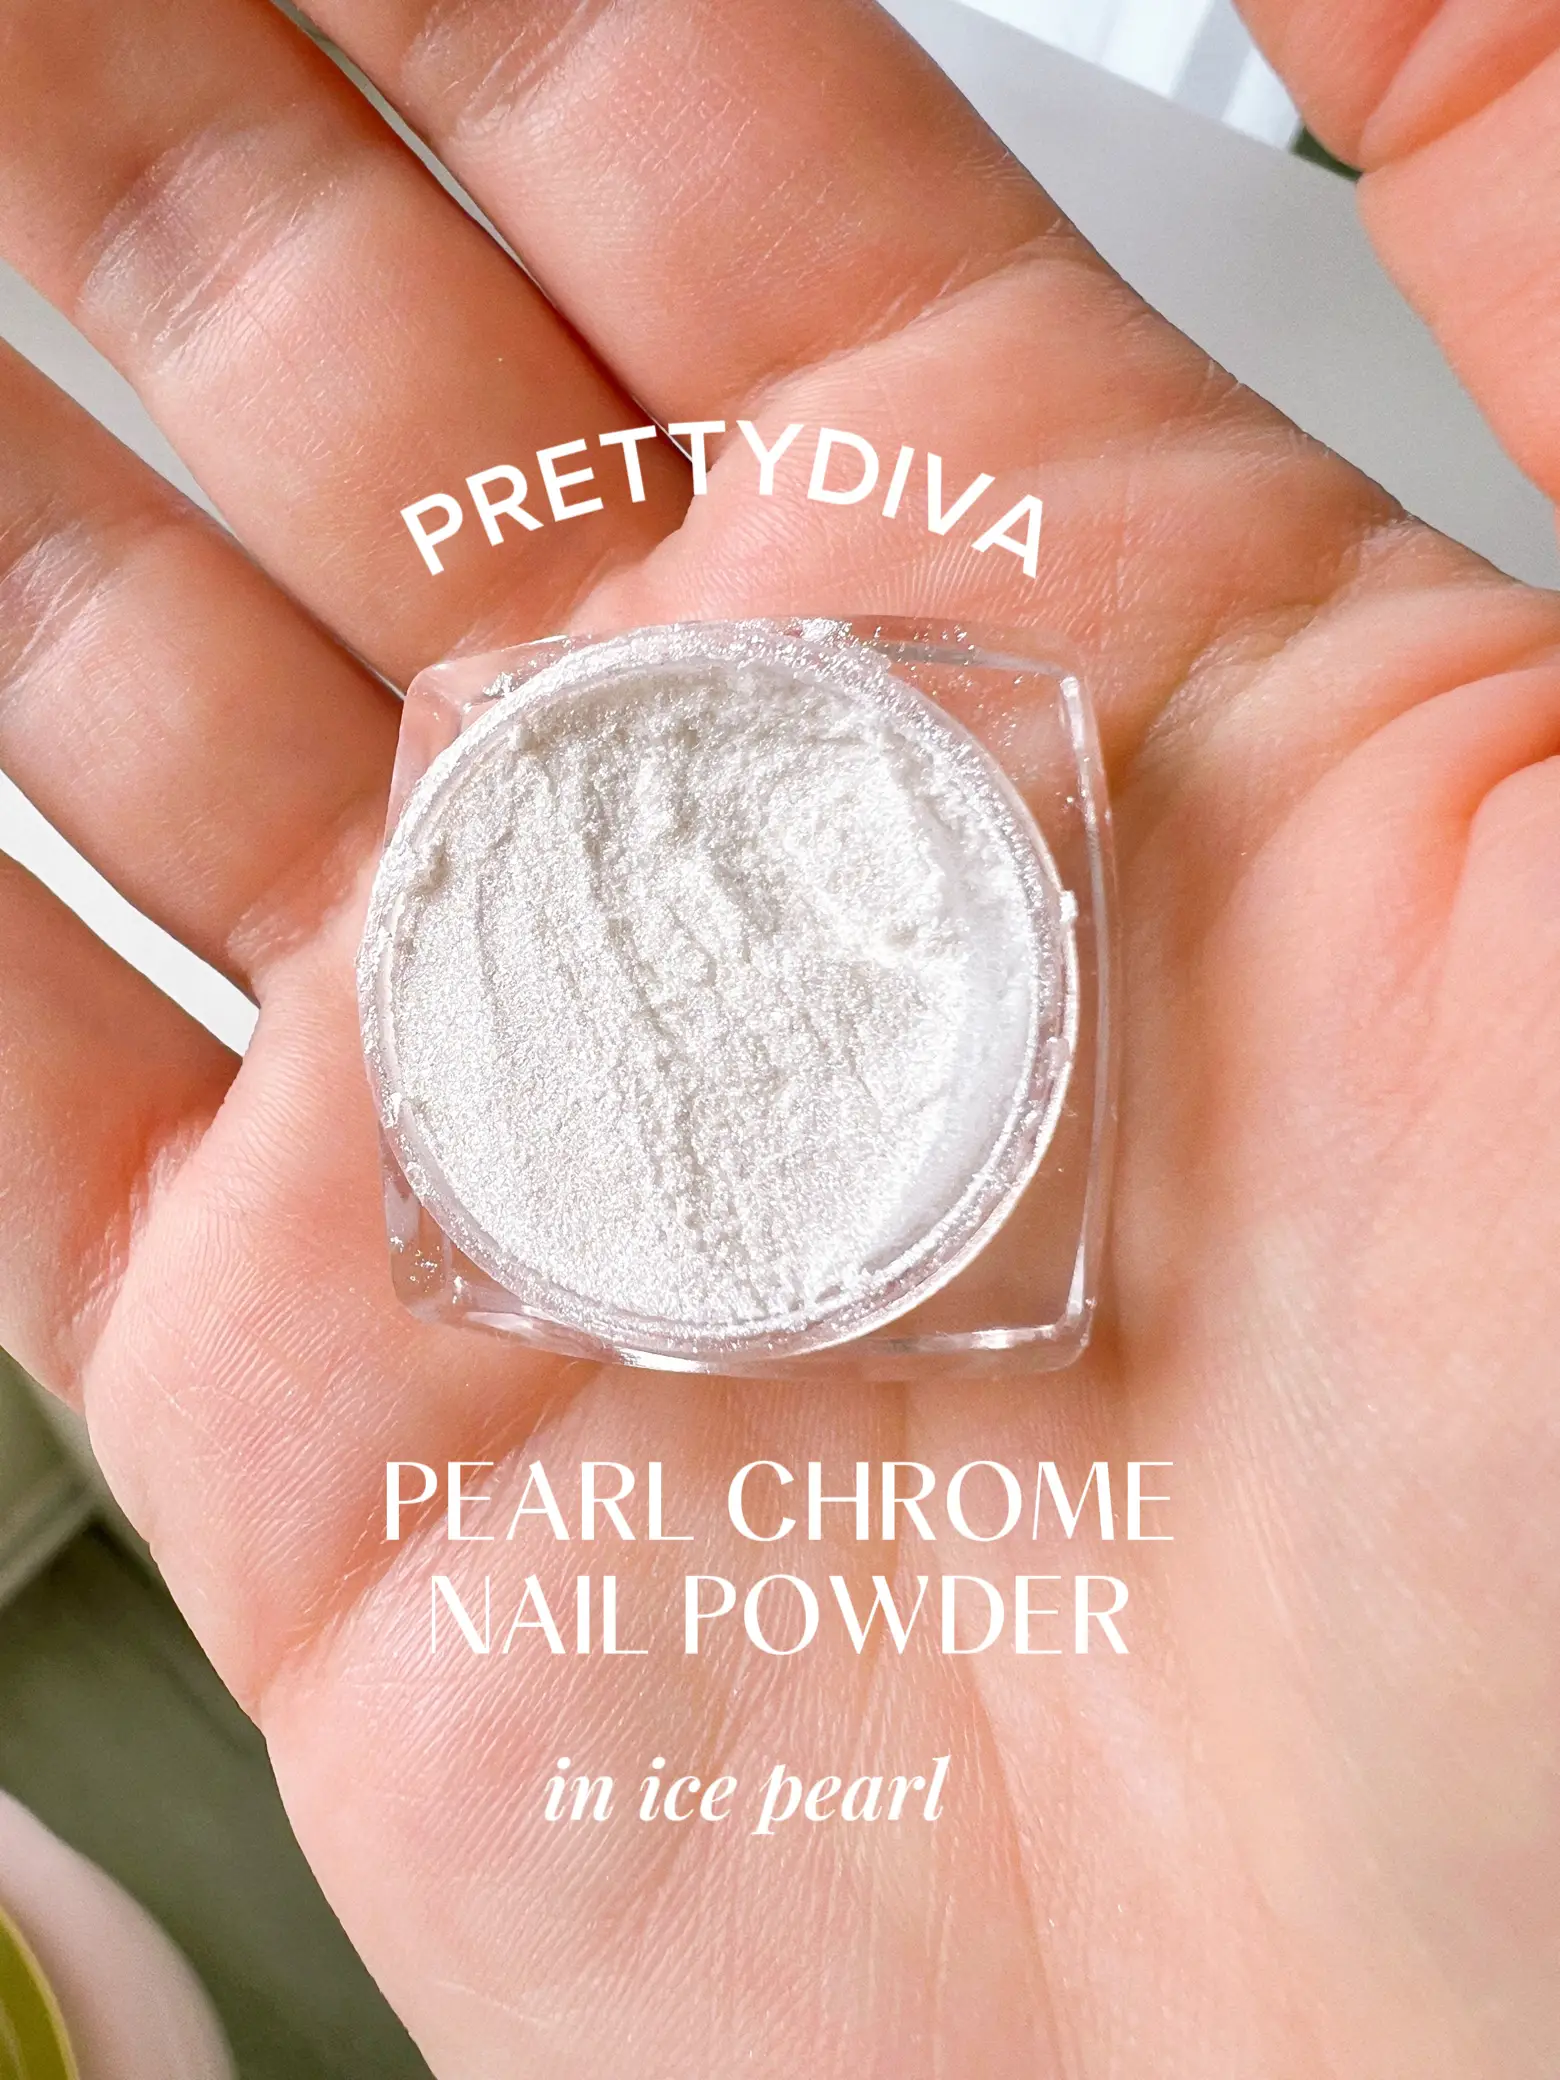 PrettyDiva Pearl Chrome Nail Powder - 2 Colors Pearl Powder Ice